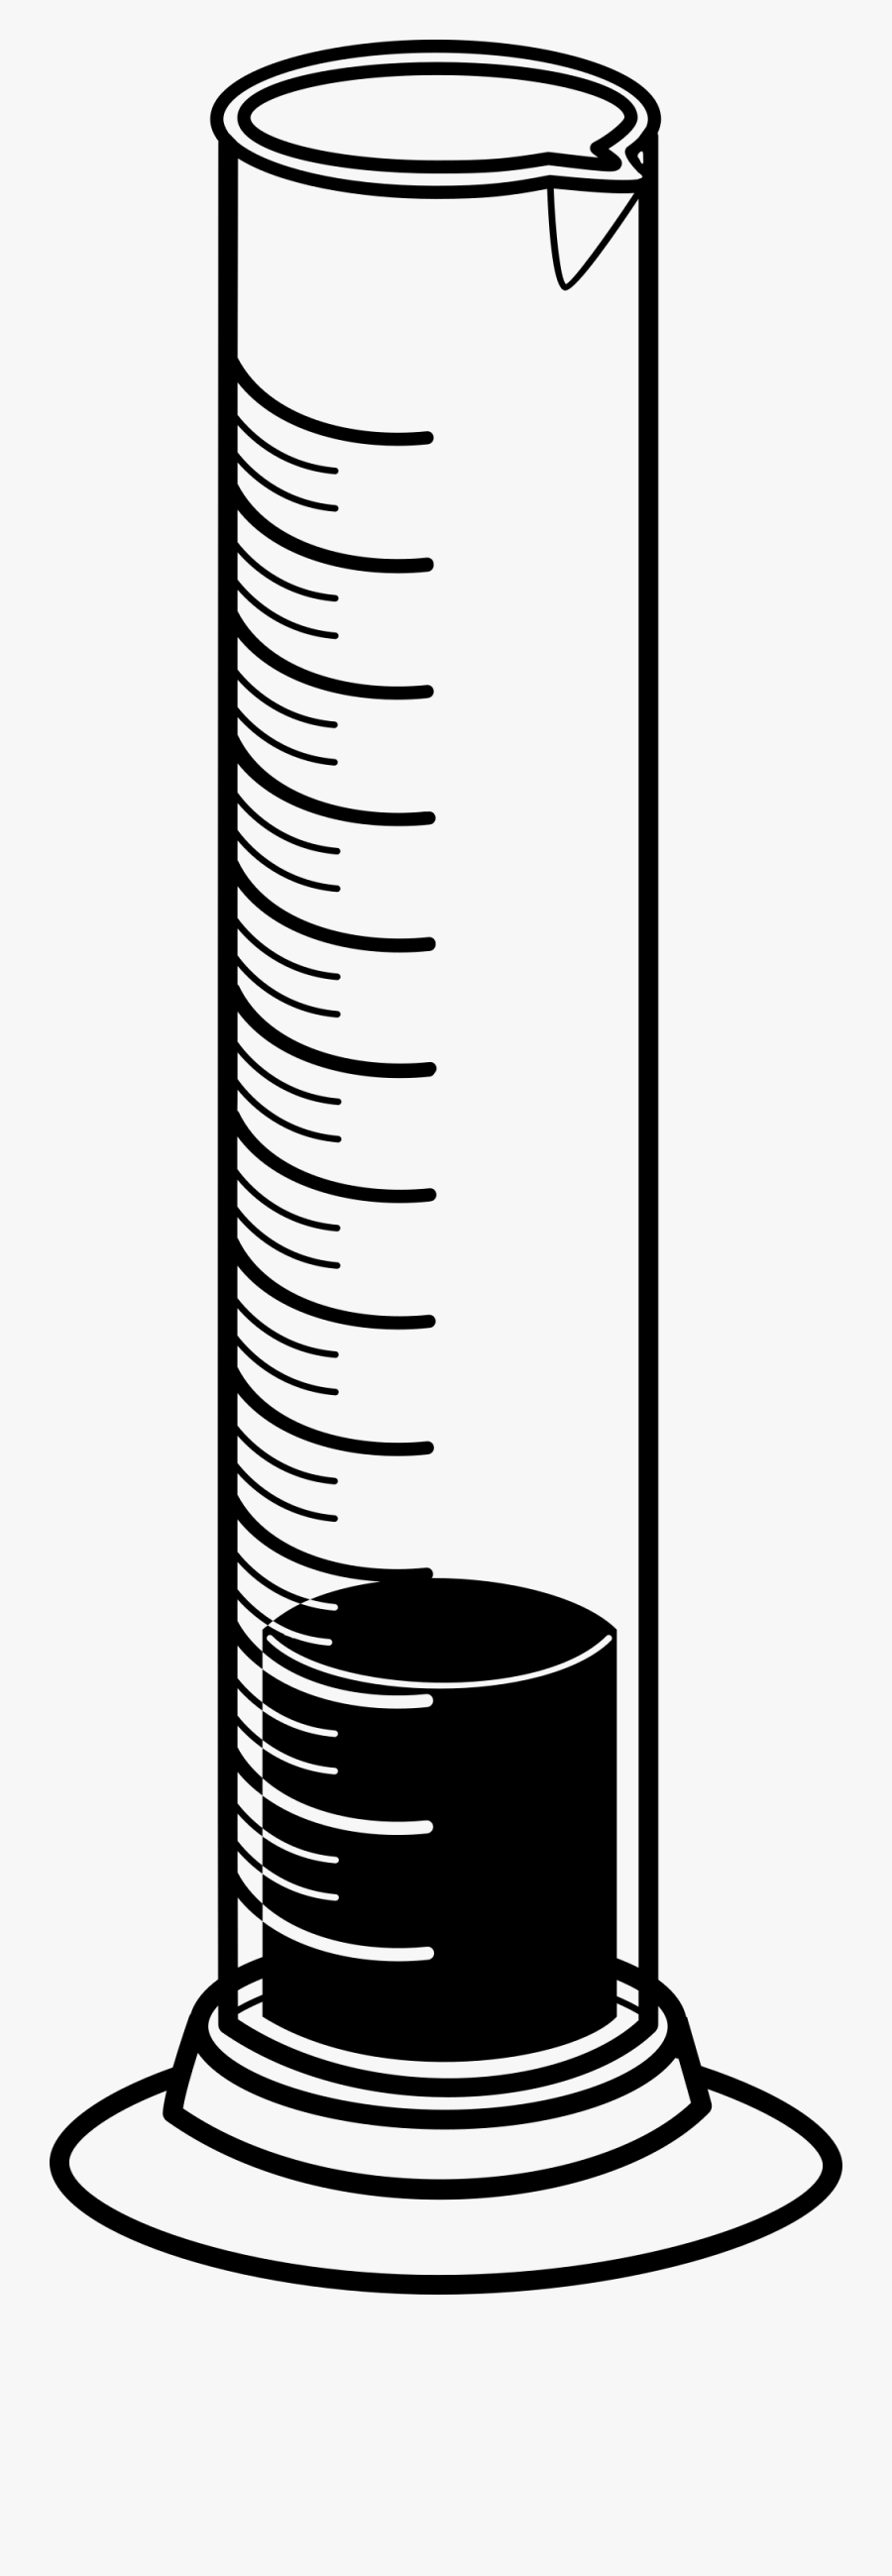 Clipart Science Cylinder - Graduated Cylinder Transparent Background, Transparent Clipart